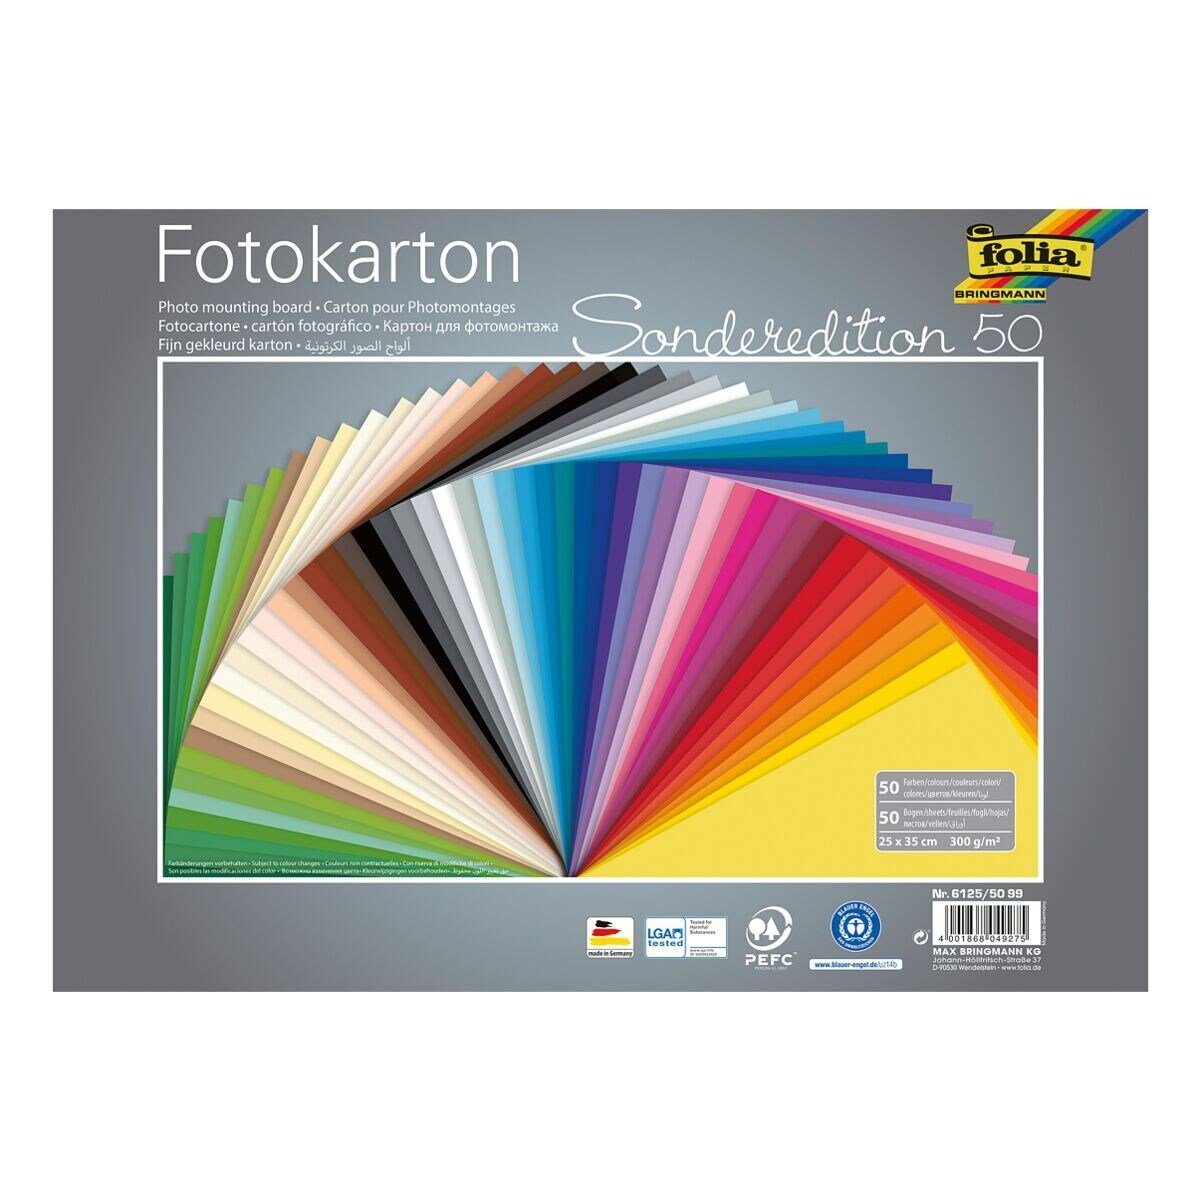 Folia Bastelkartonpapier Sonderedition 50, Fotokarton 50 Farben, 25x35 cm, 300 g/m², 50 Blatt